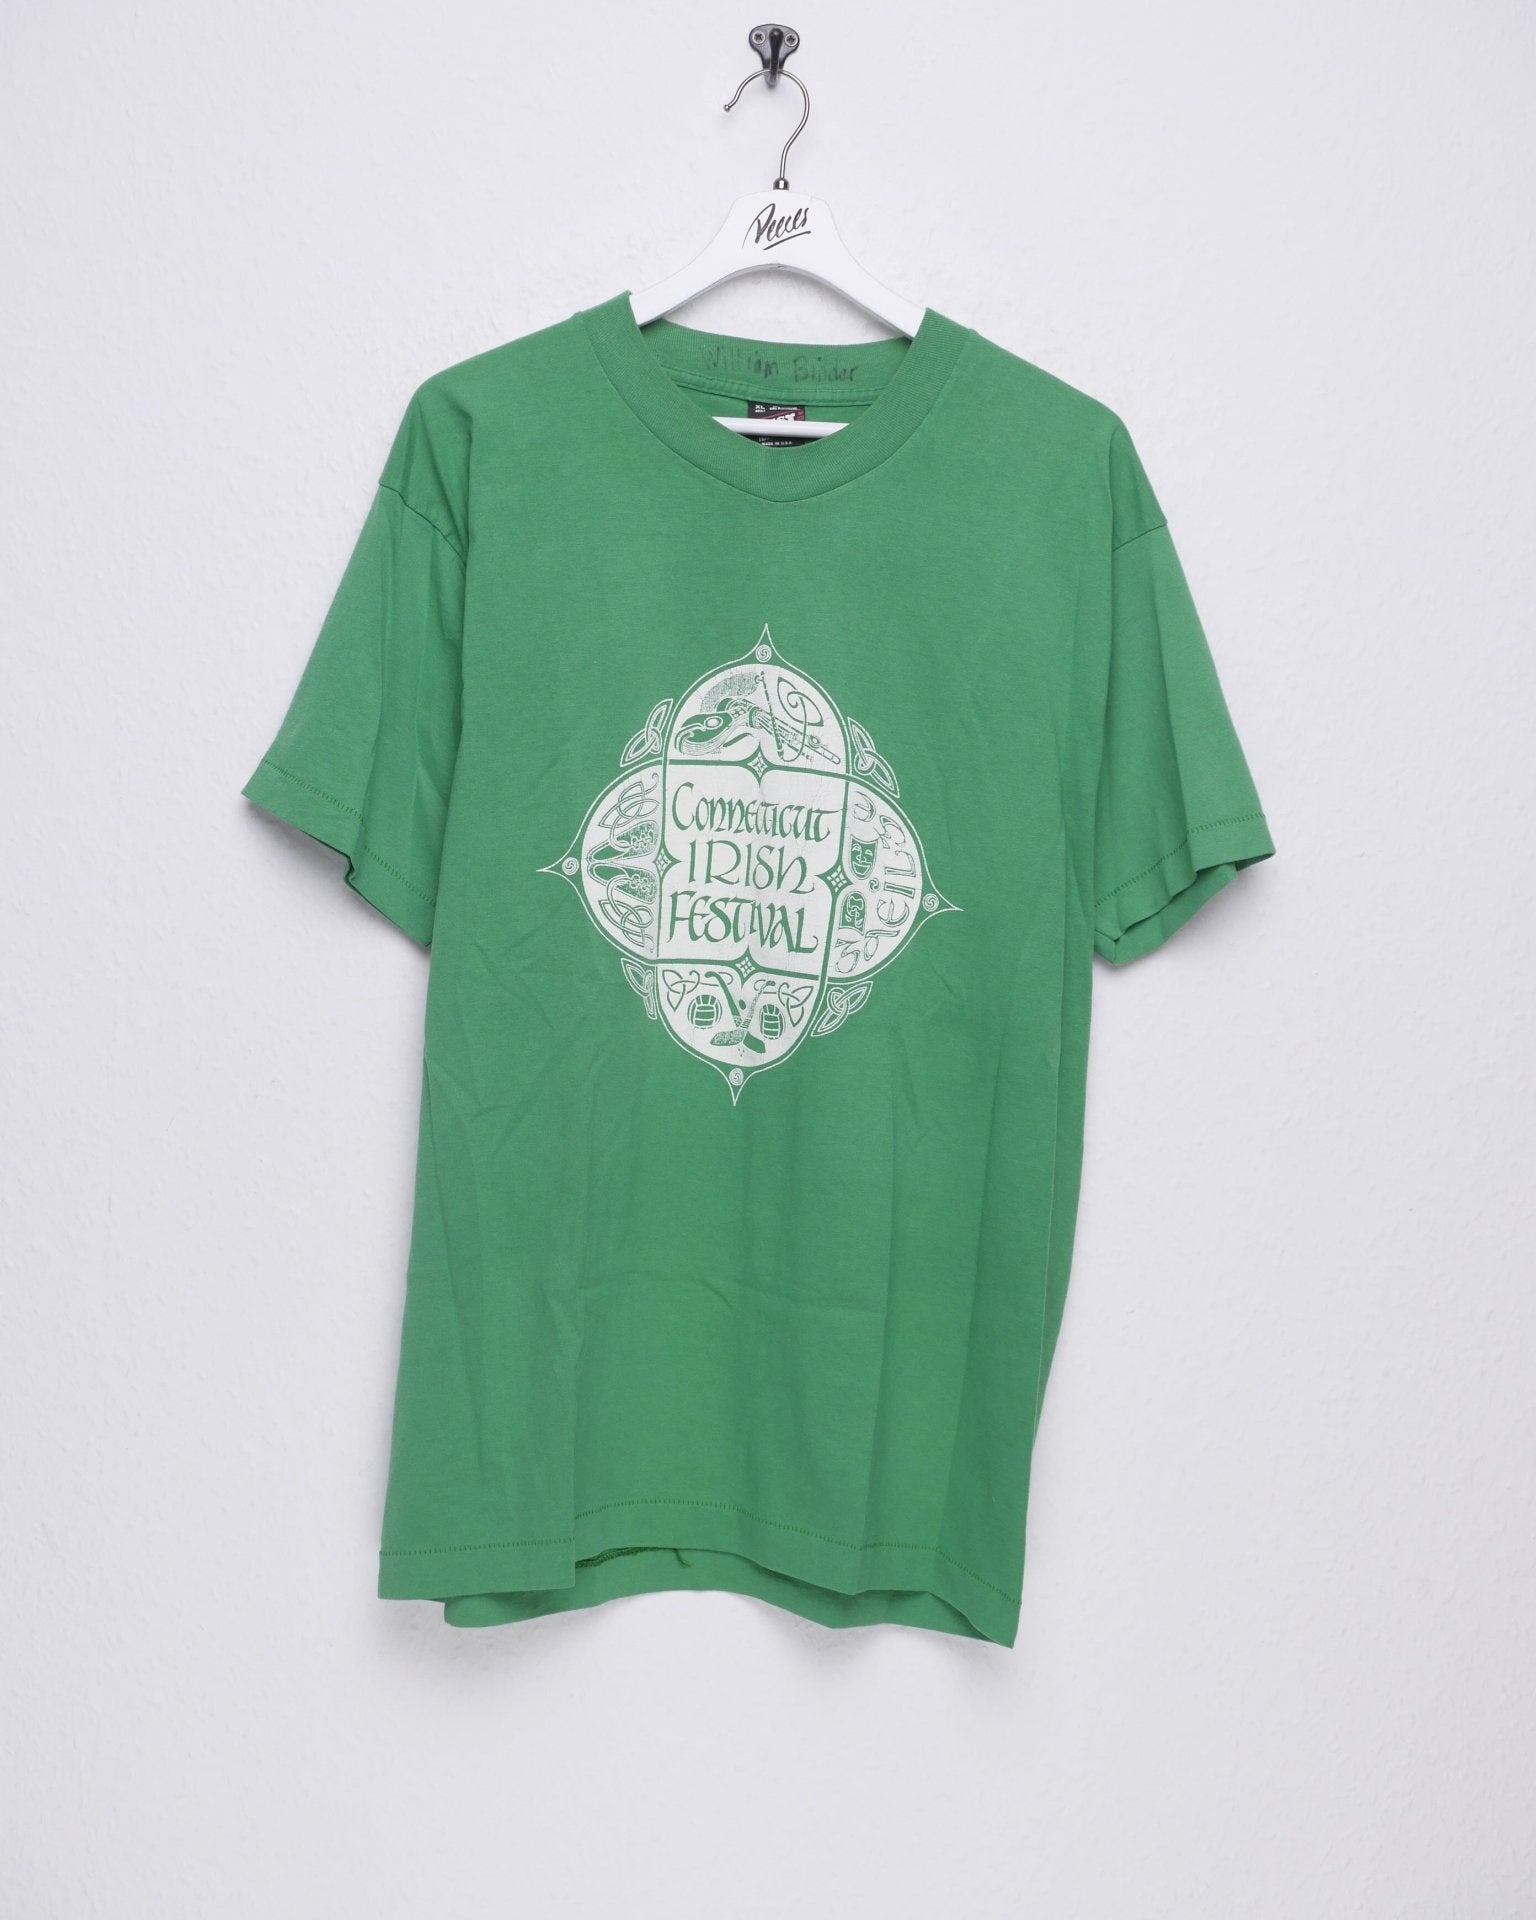 Connecticut Irish Festival printed Graphic green Shirt - Peeces